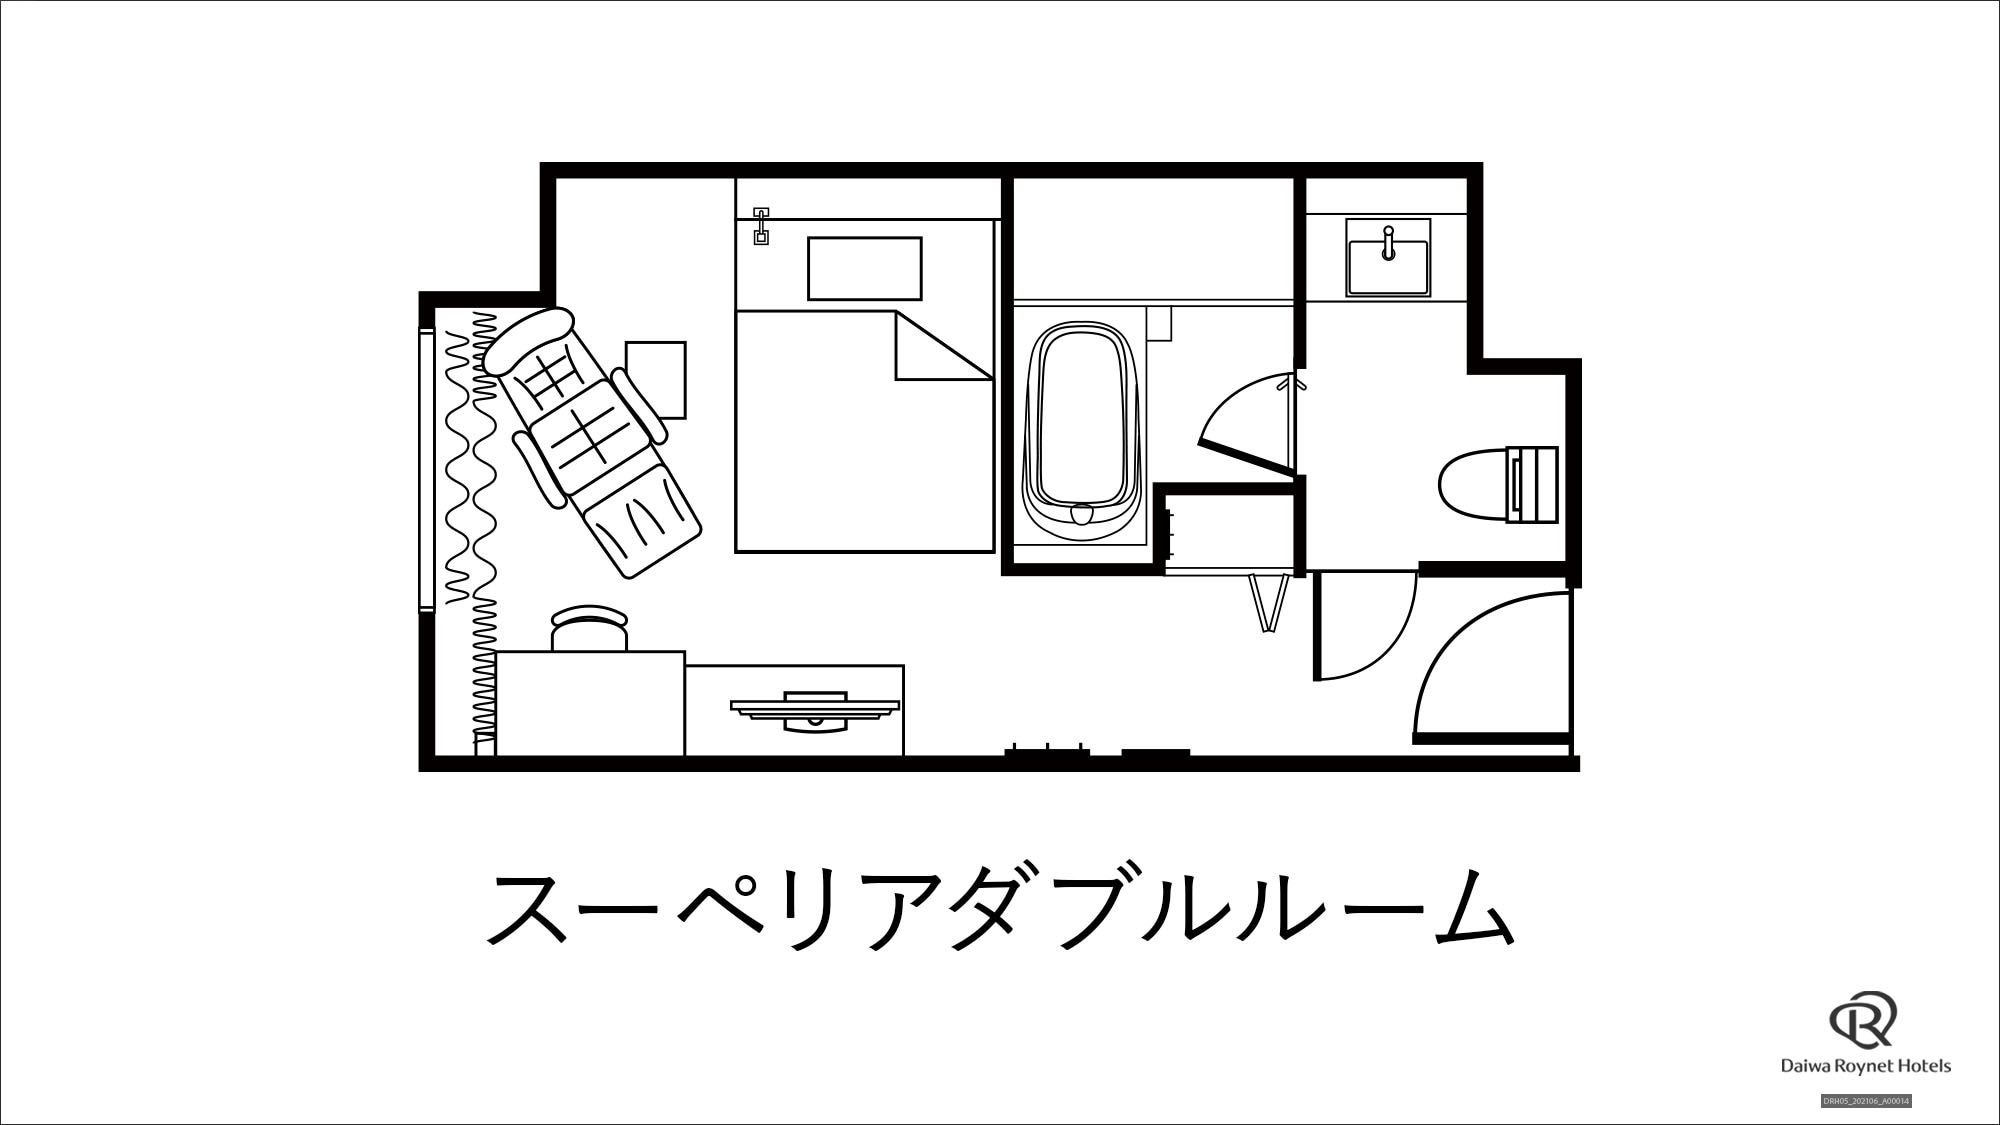 Superior double floor plan